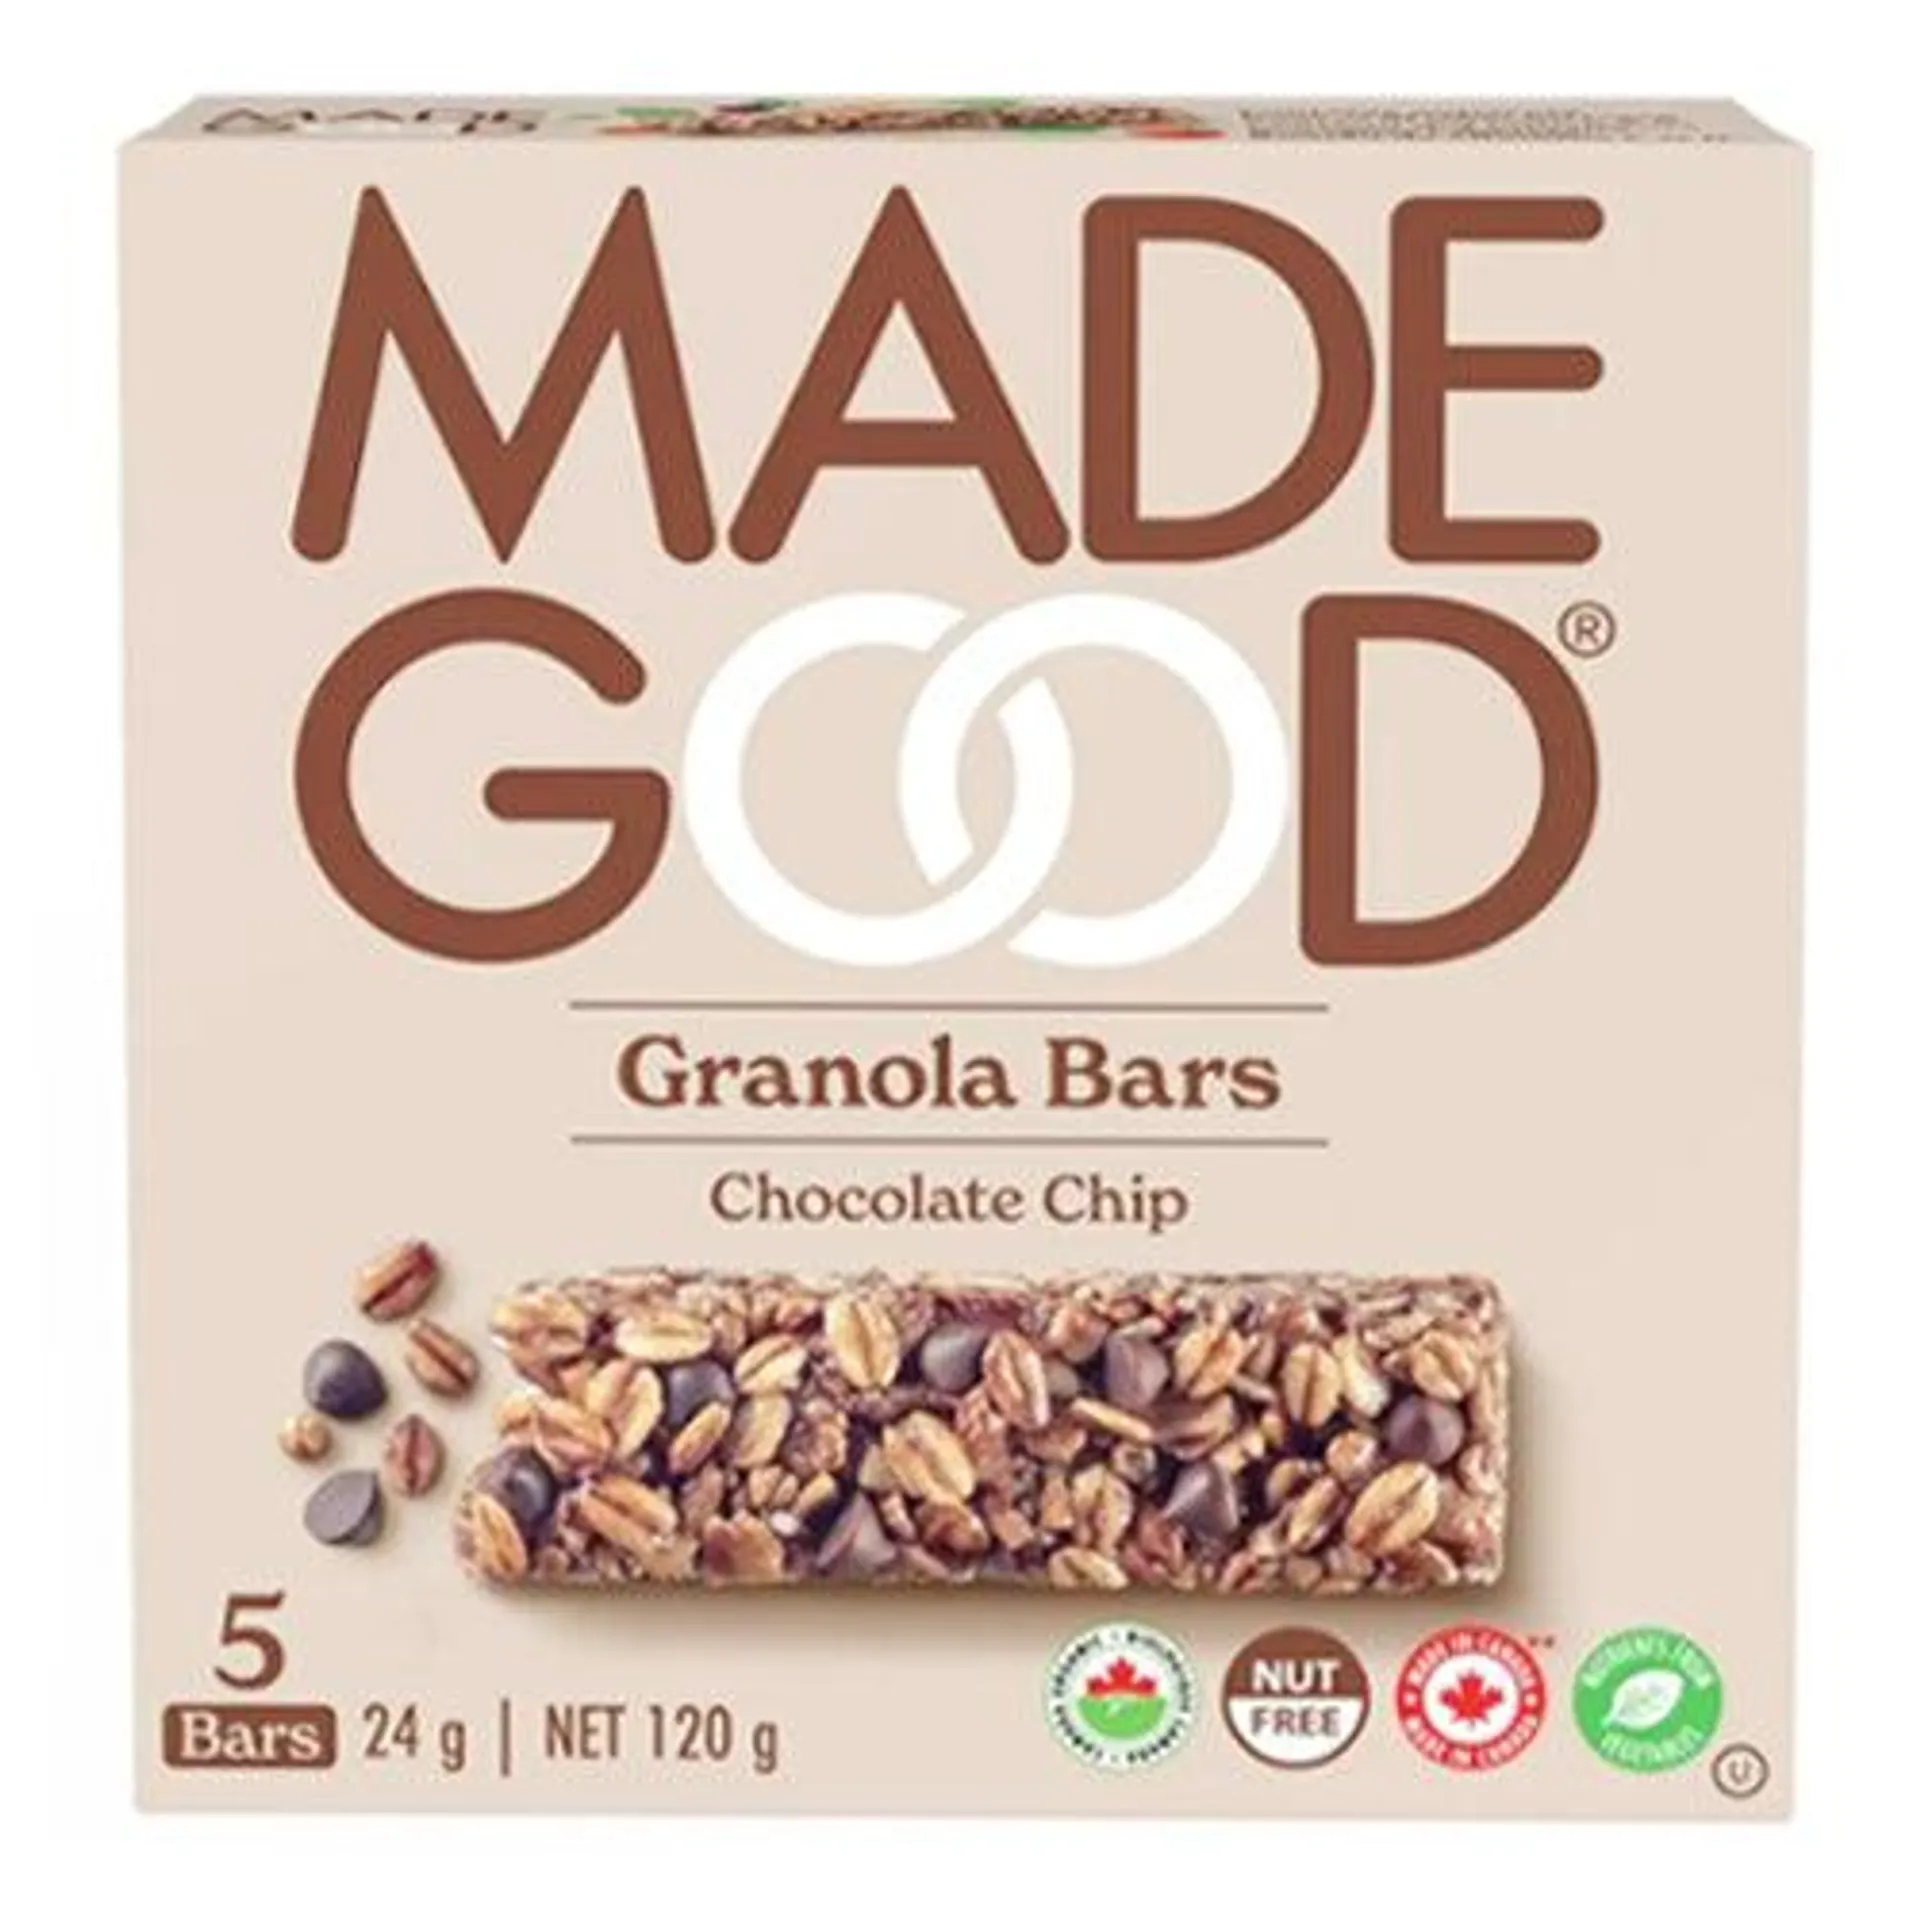 MadeGood Chocolate Chip Granola Bars-5bars